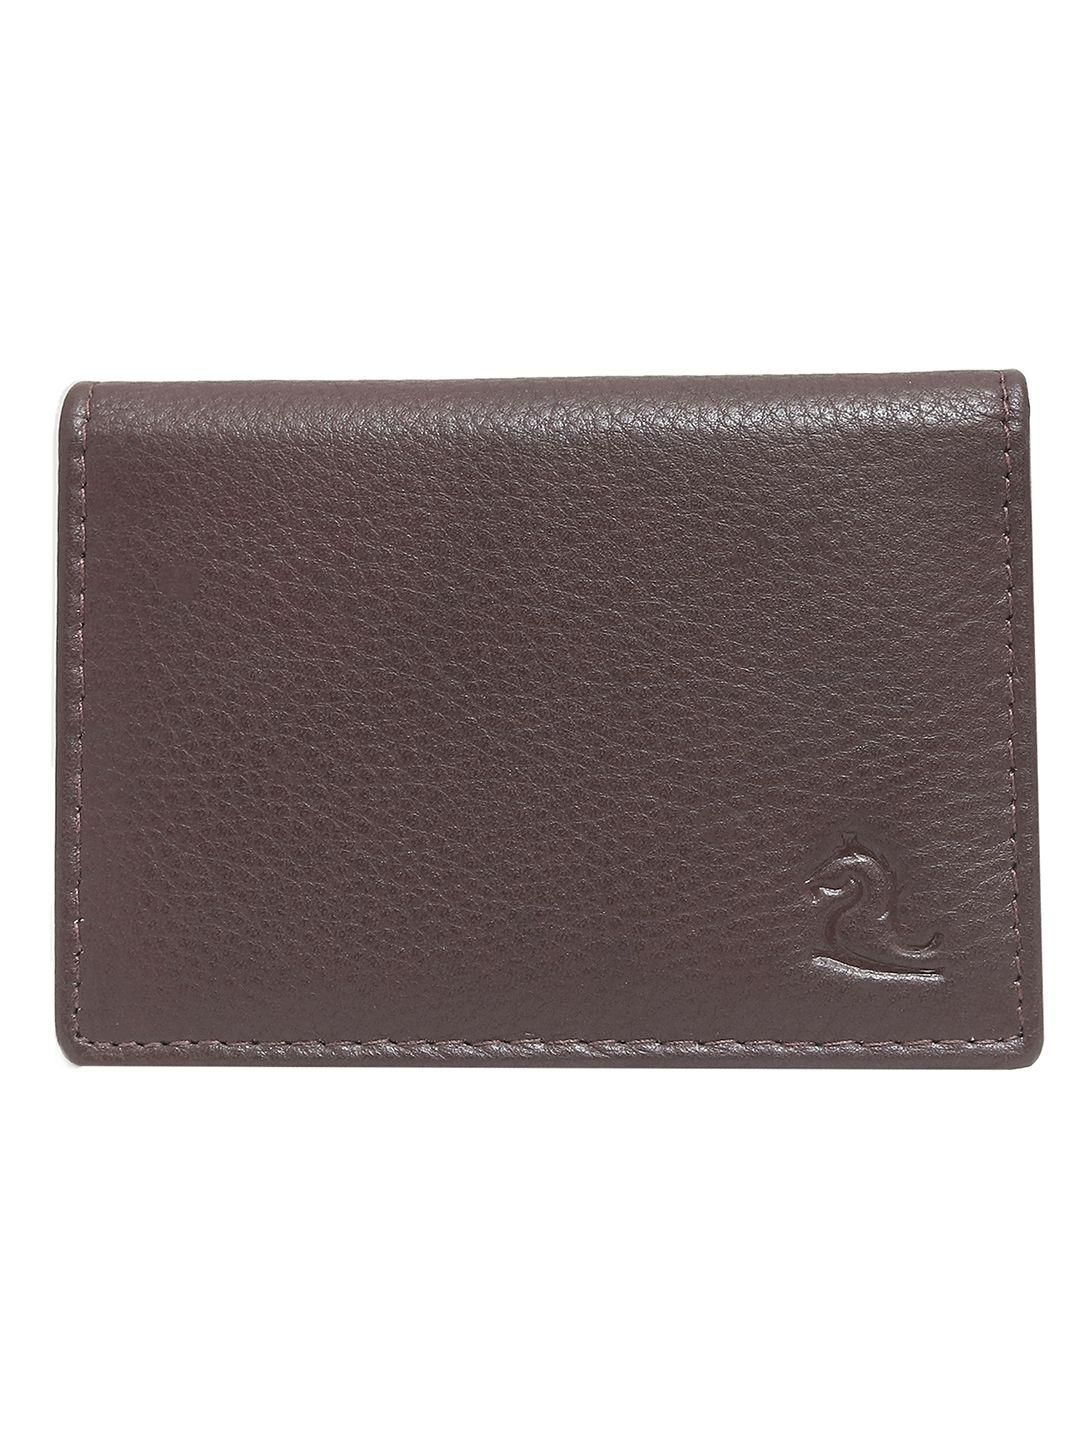 kara unisex tan brown solid leather card holder